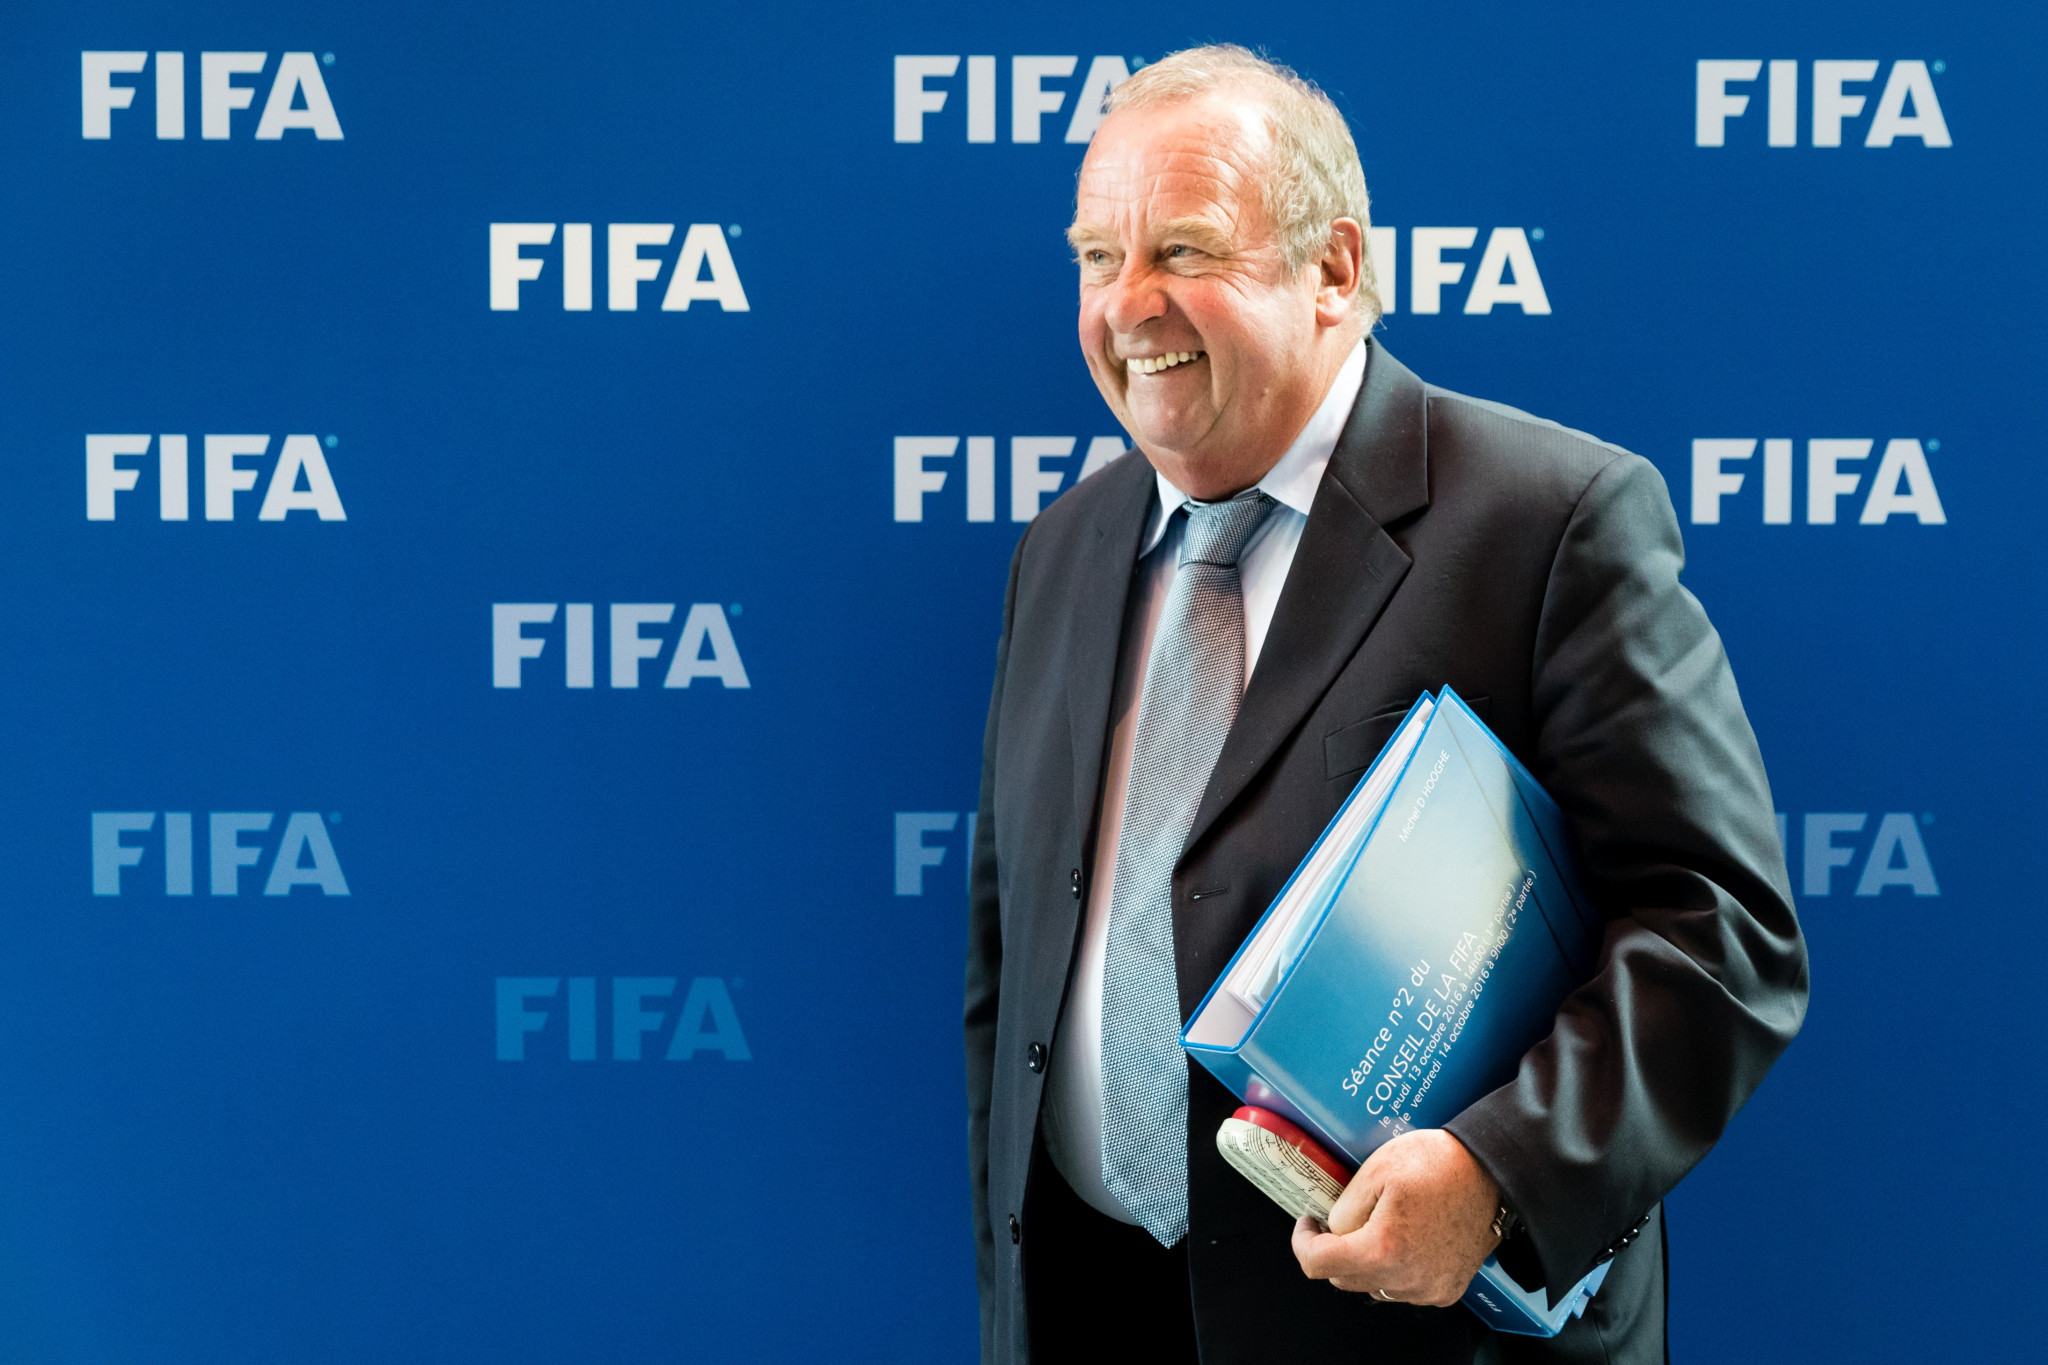 Belgian Michel D'Hooghe said the new regulations showed how UEFA is 